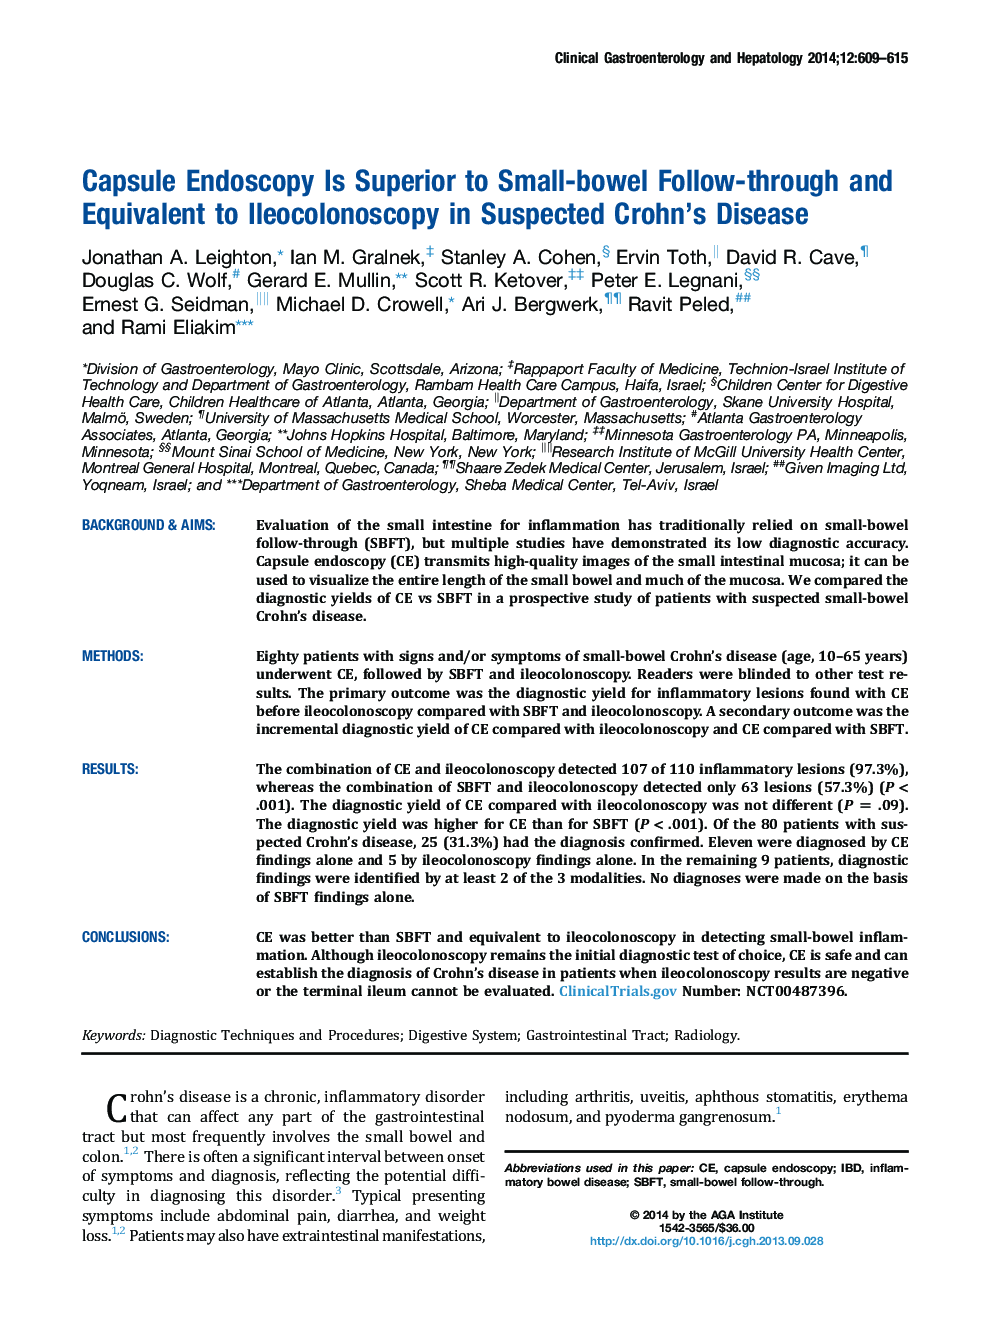 Capsule Endoscopy Is Superior to Small-bowel Follow-through and Equivalent to Ileocolonoscopy in Suspected Crohn's Disease